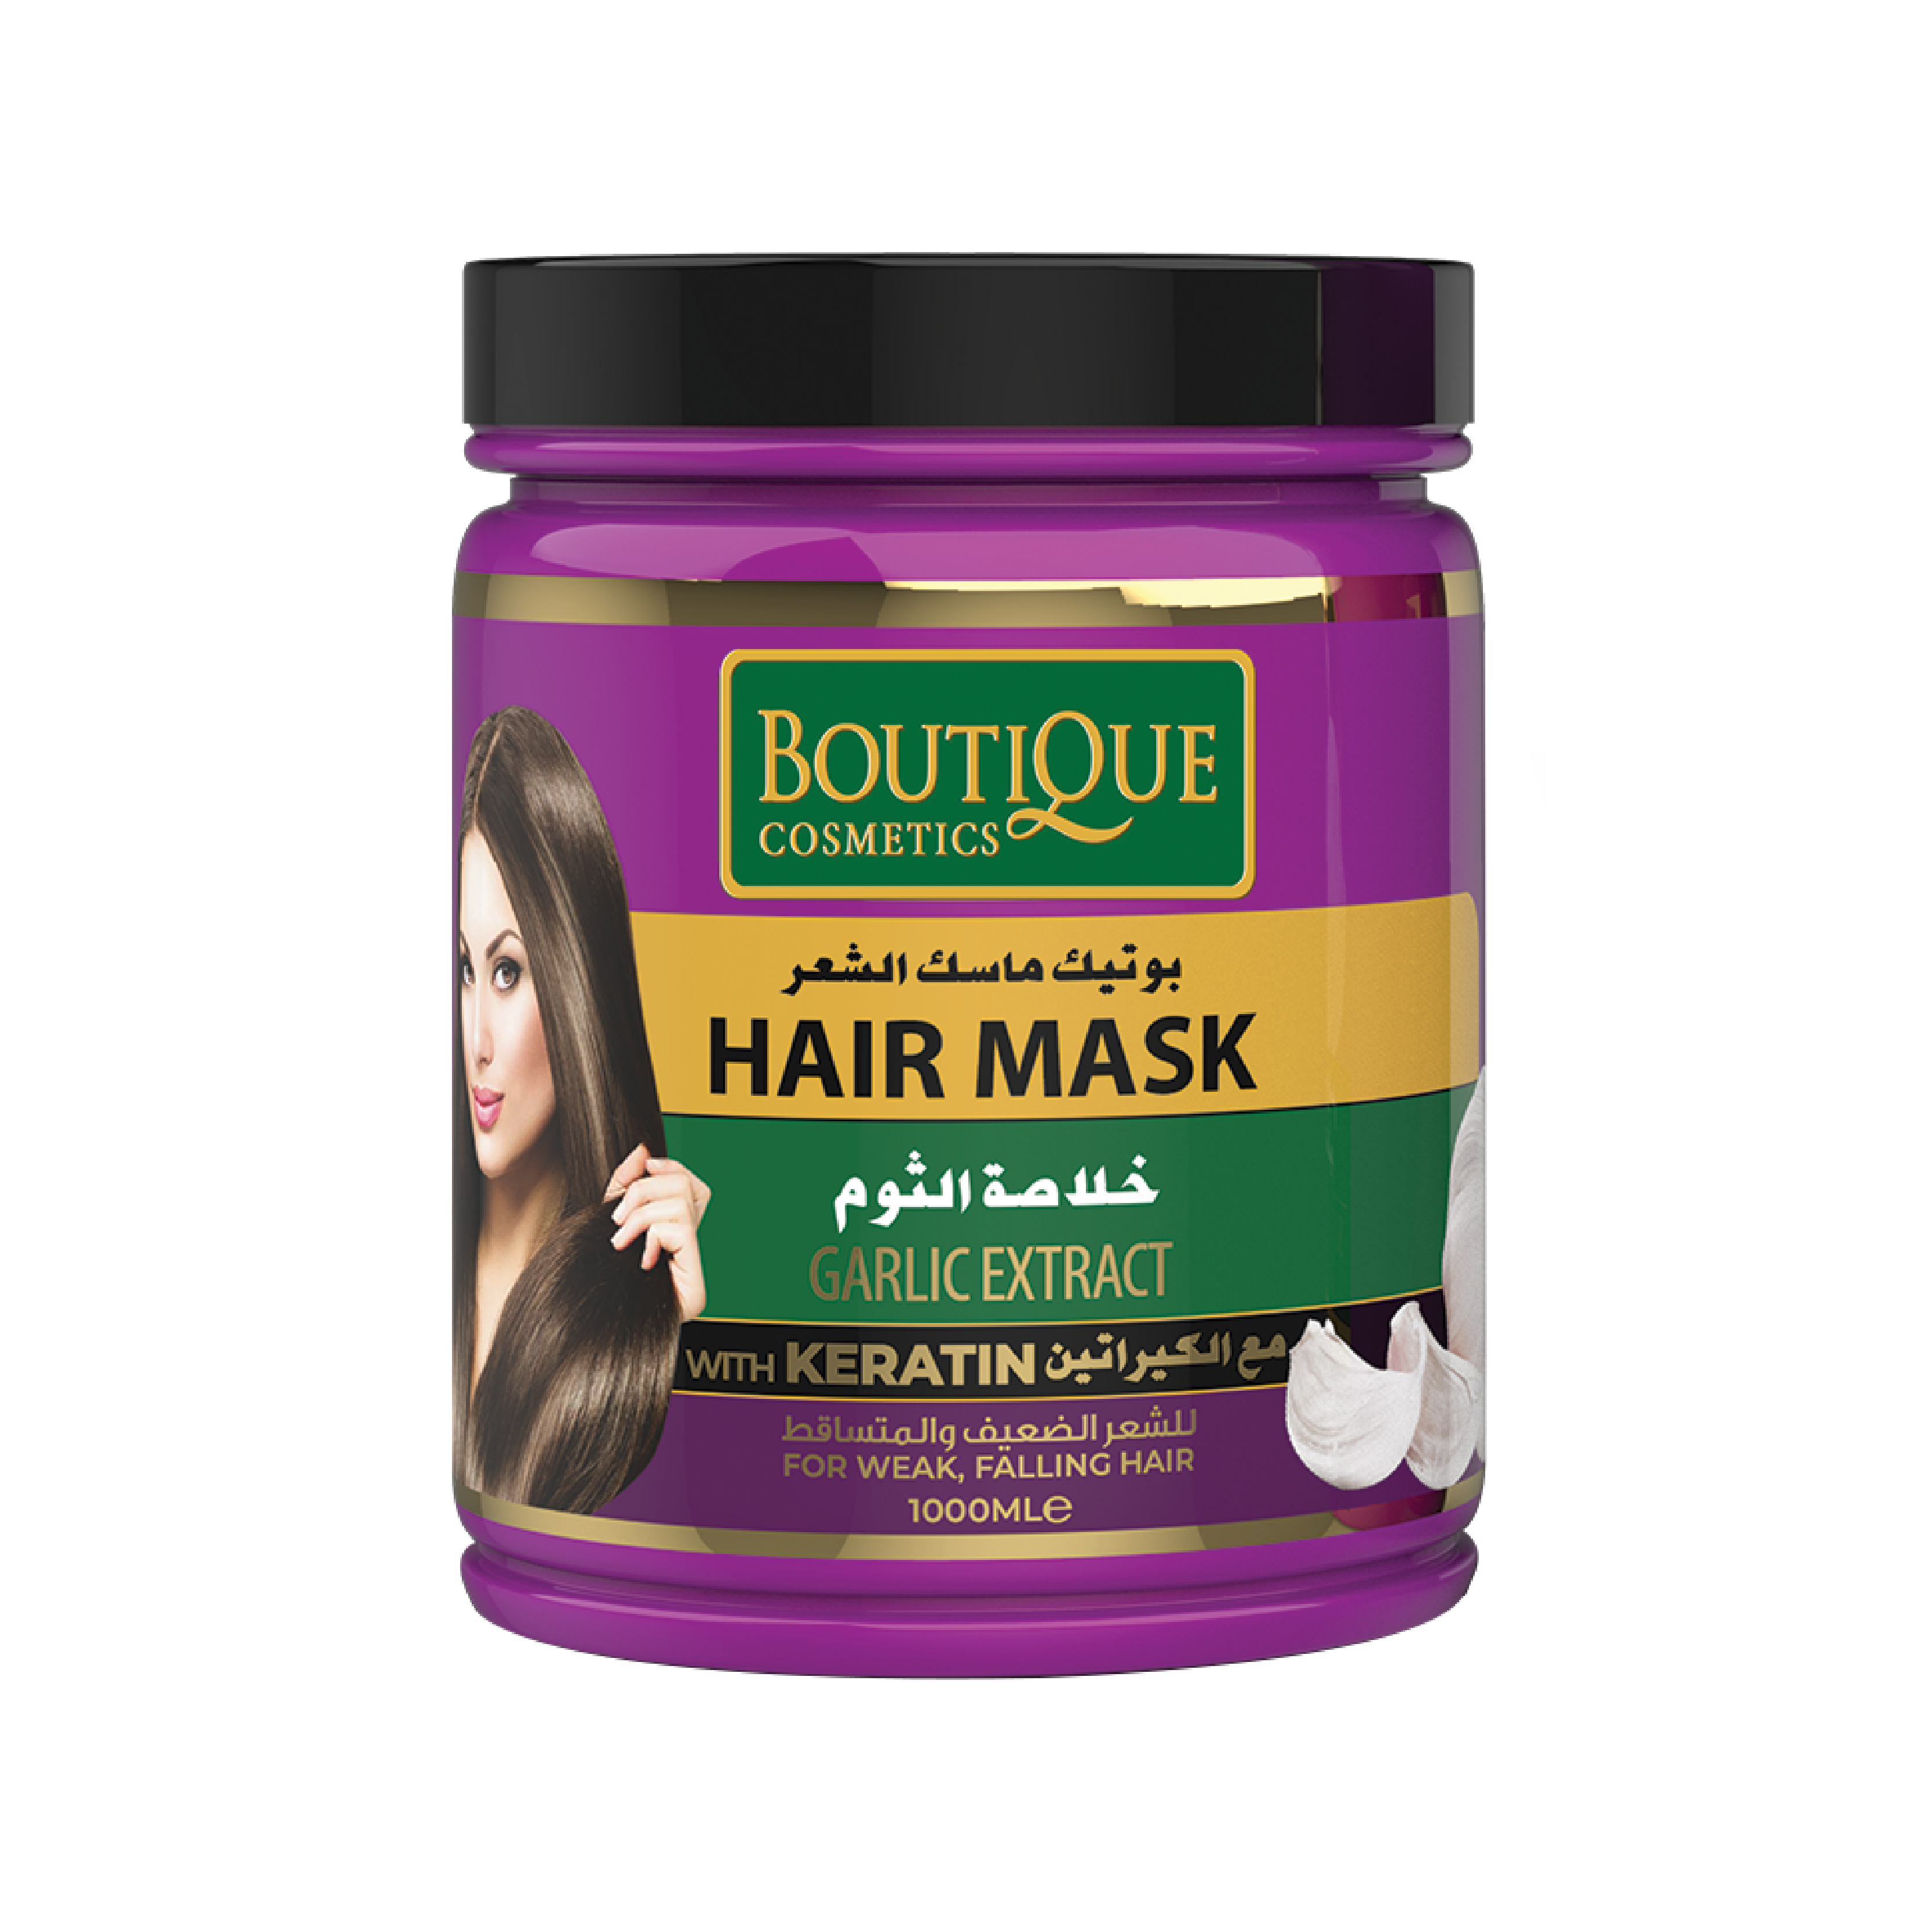 Intensive Garlic Extract Hair Mask - 1000ml